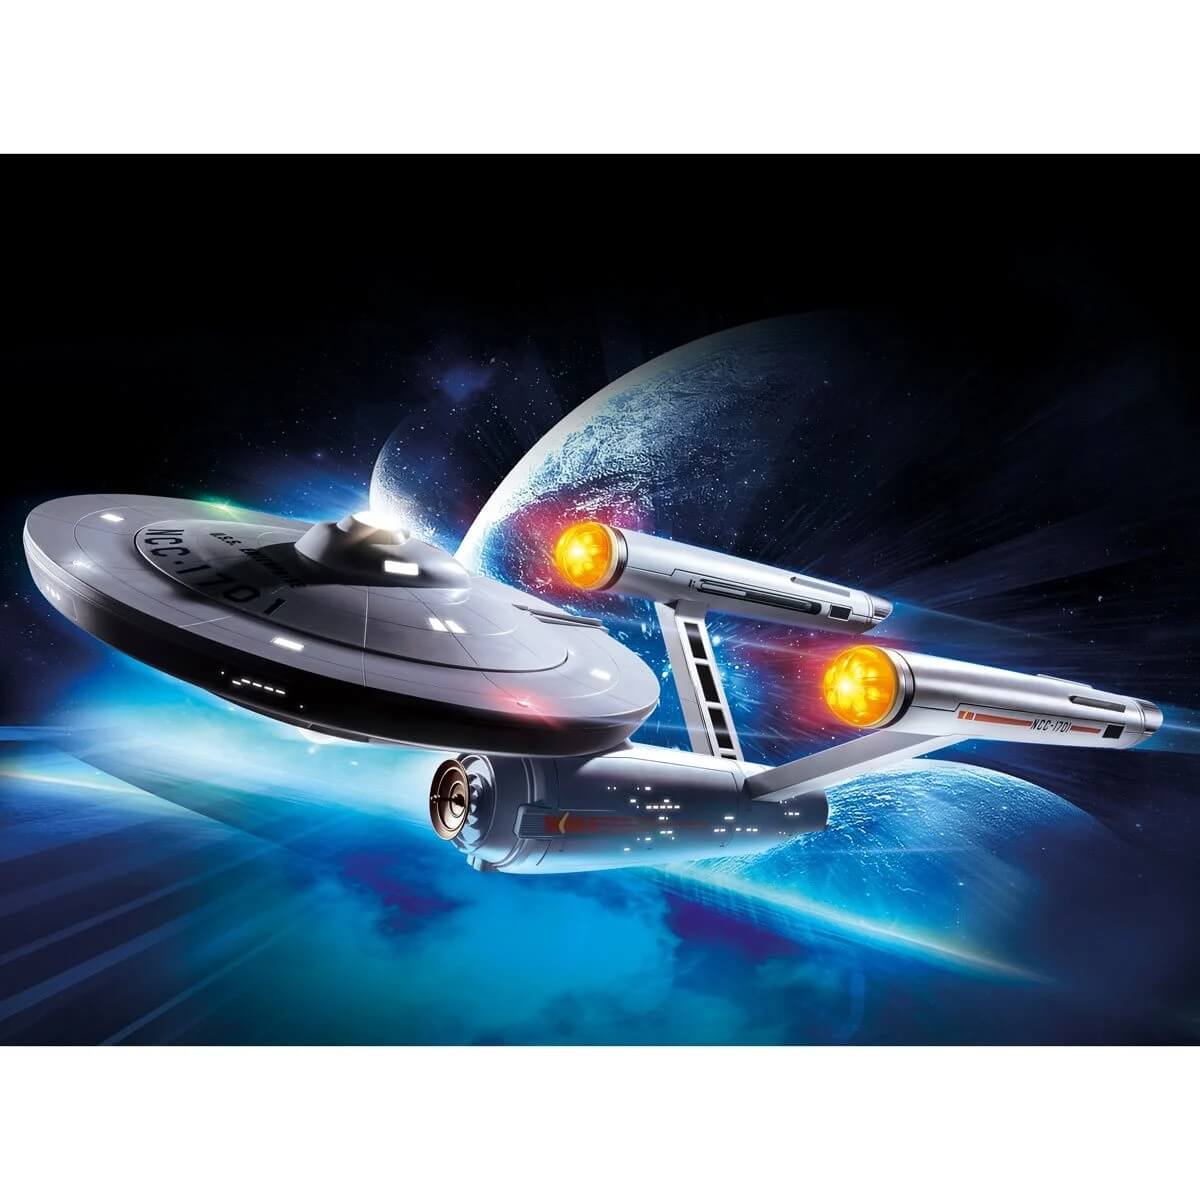 Artist's rendering of the Playmobil Star Trek U.S.S. Enterprise NCC-1701 Limited Edition in space.